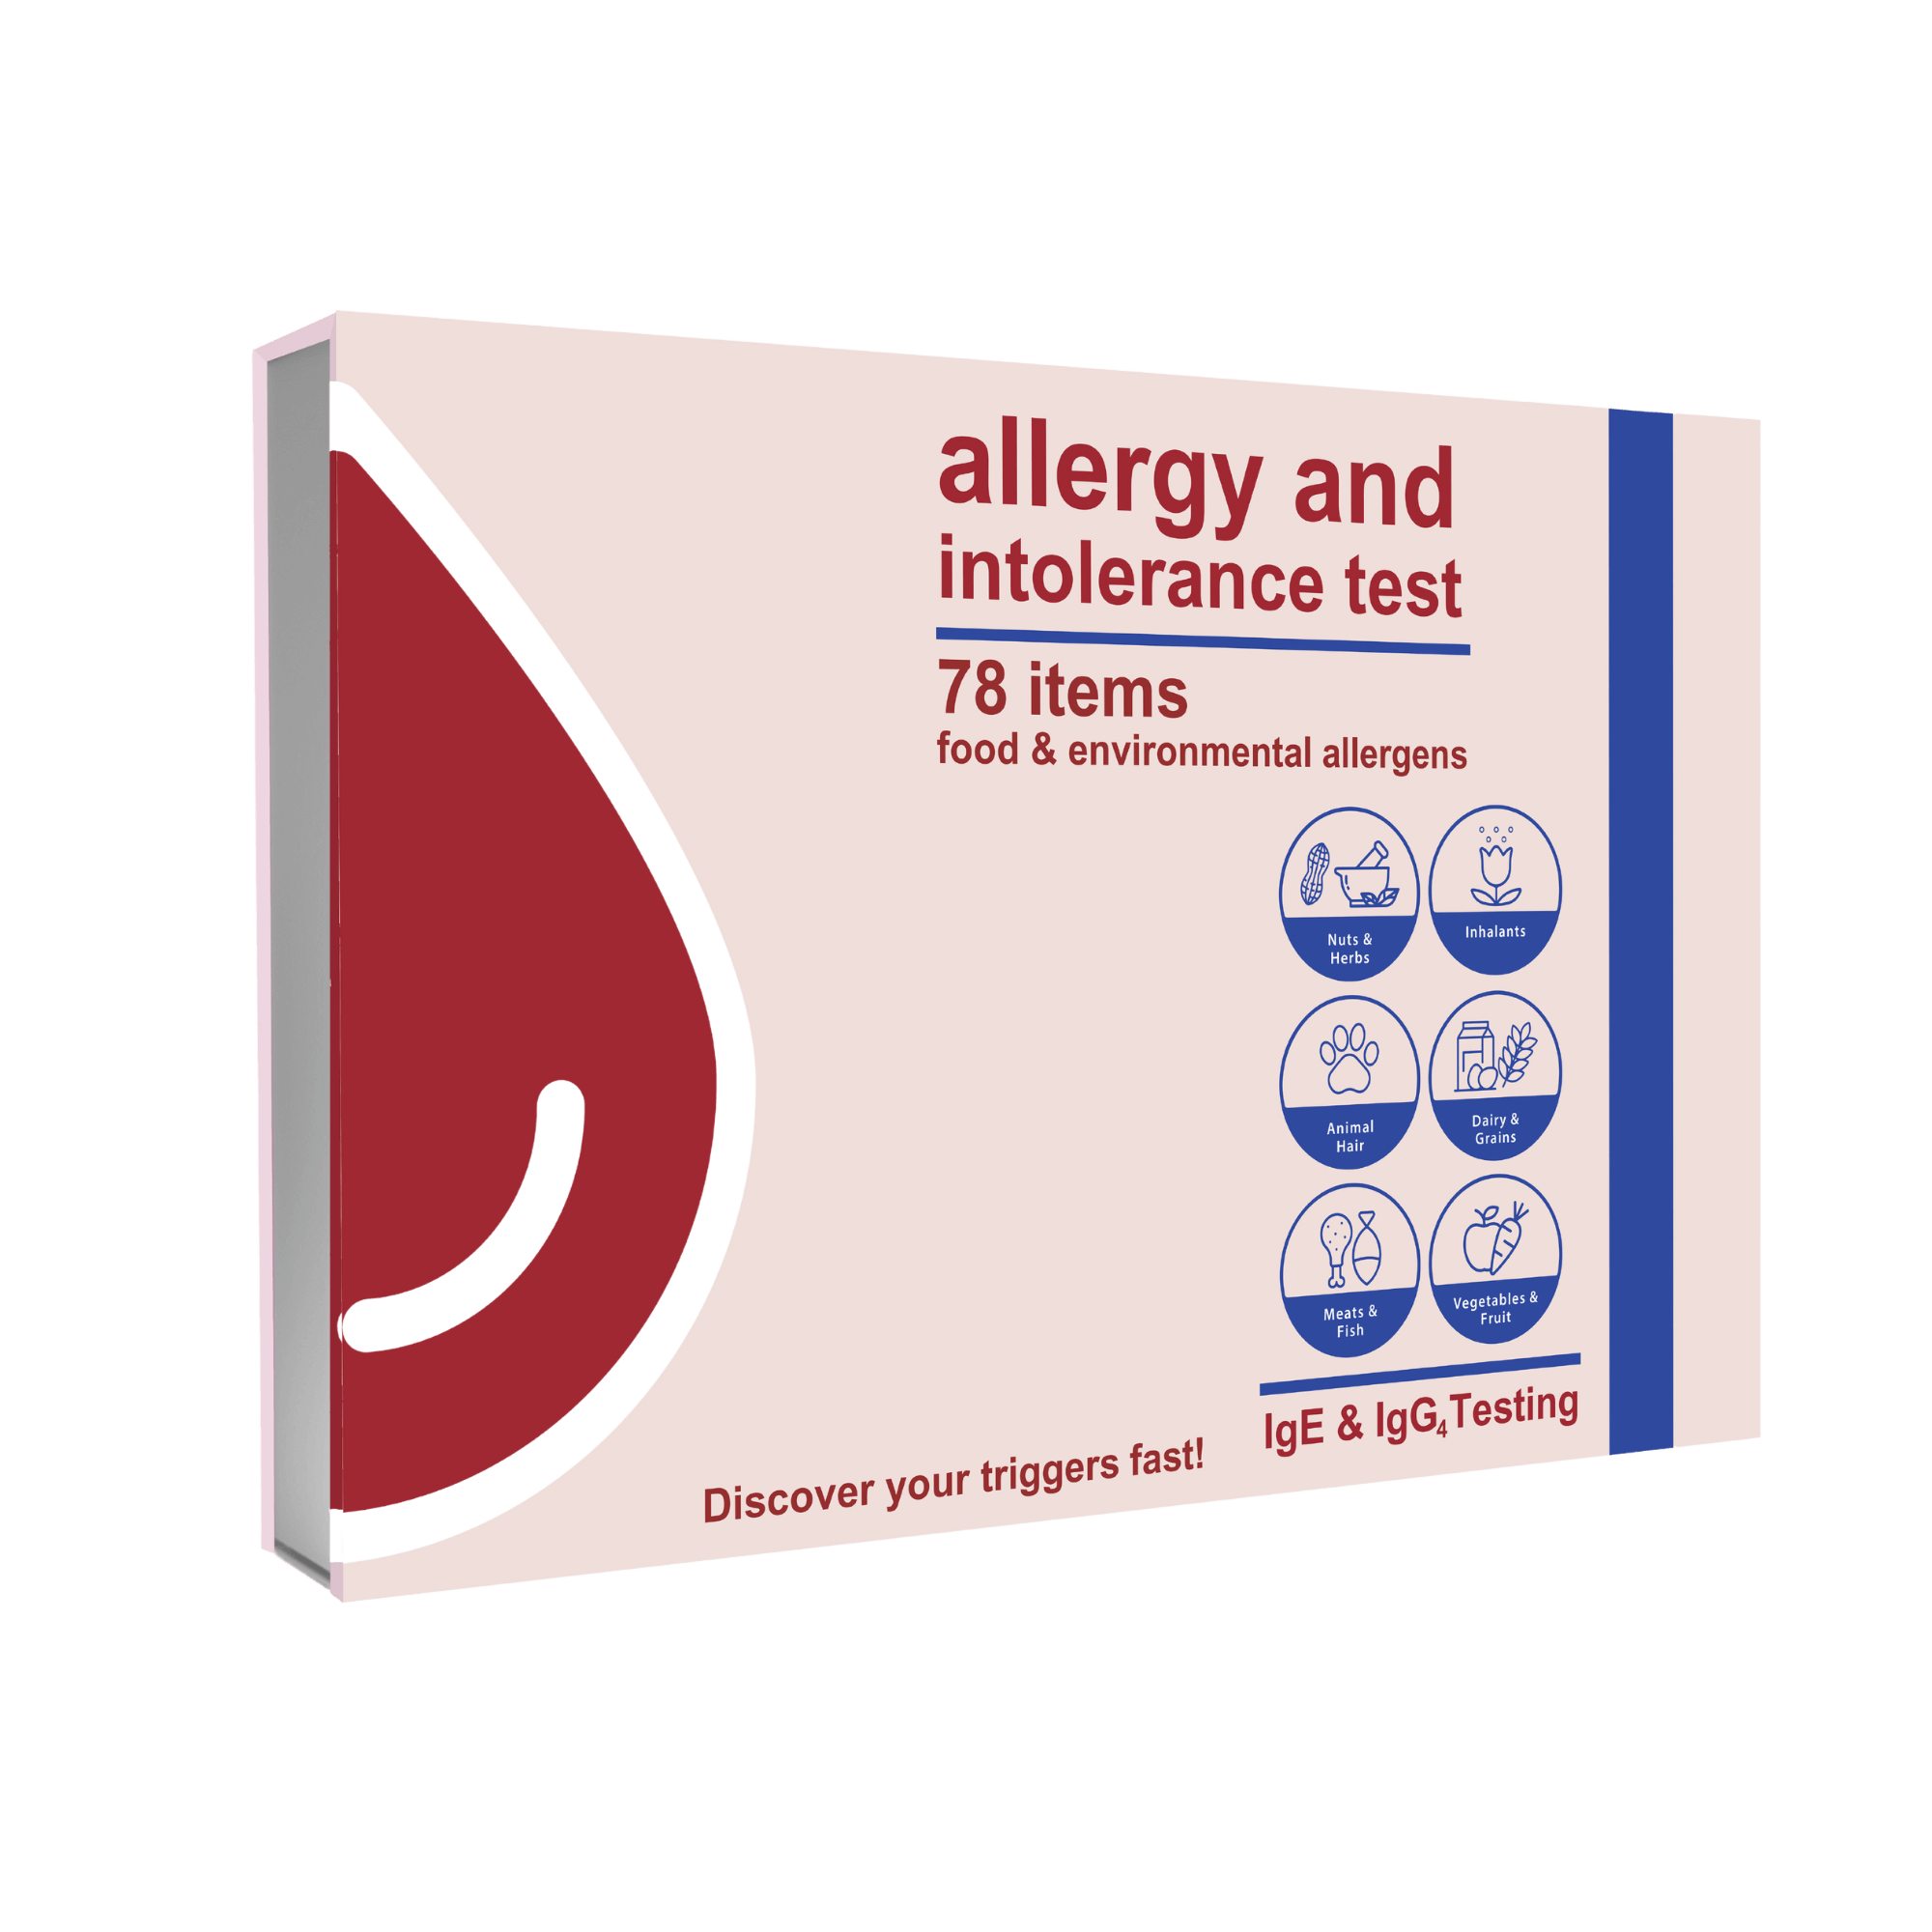 allergy intolerance test - Eggs Intolerance